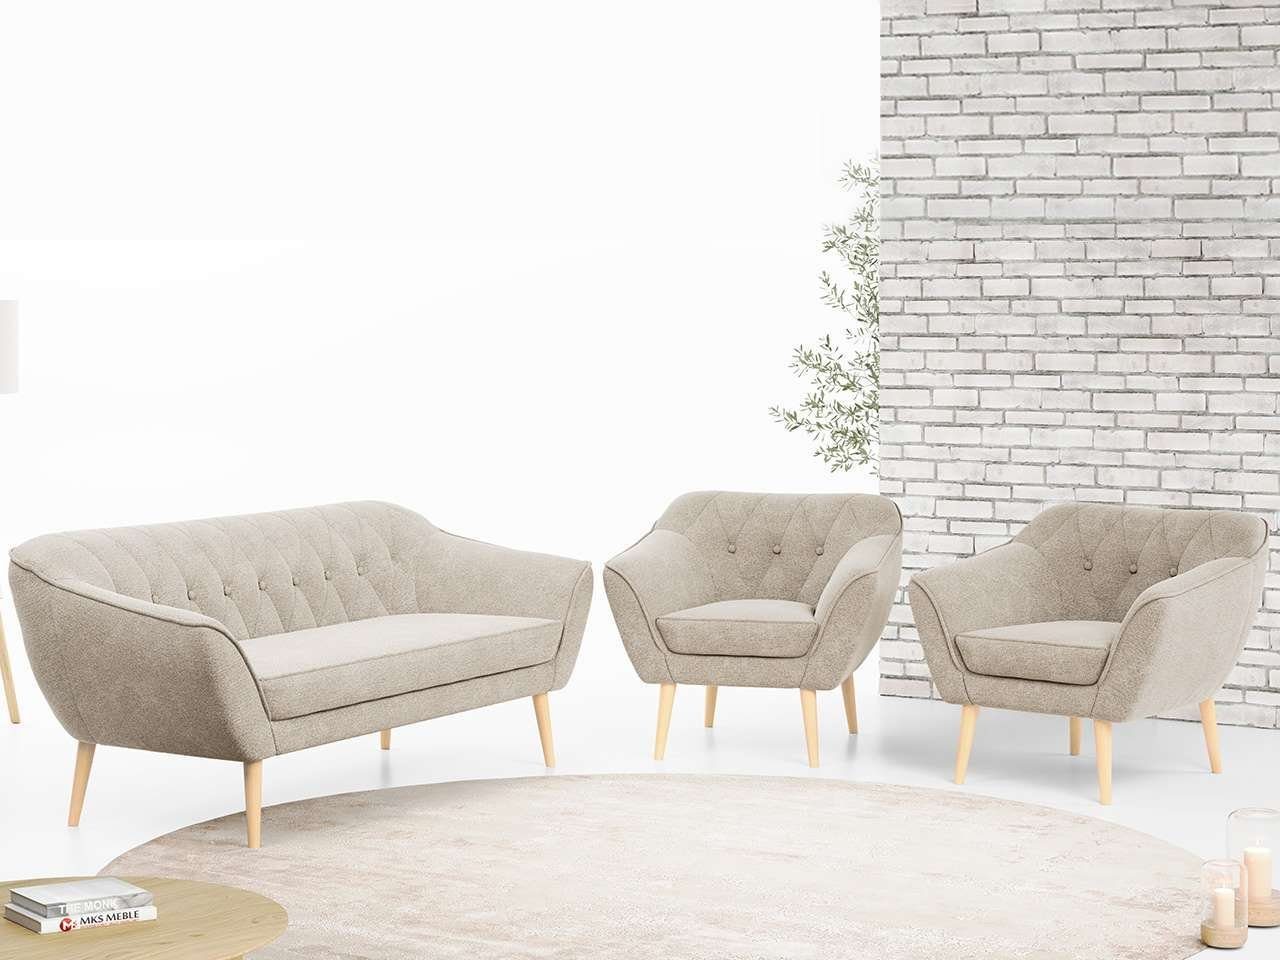 MKS MÖBEL Sofa PIRS 3 1 1, mit Relaxfunktion, Moderne Sofa Set, Skandinavische Deko Beige Matana